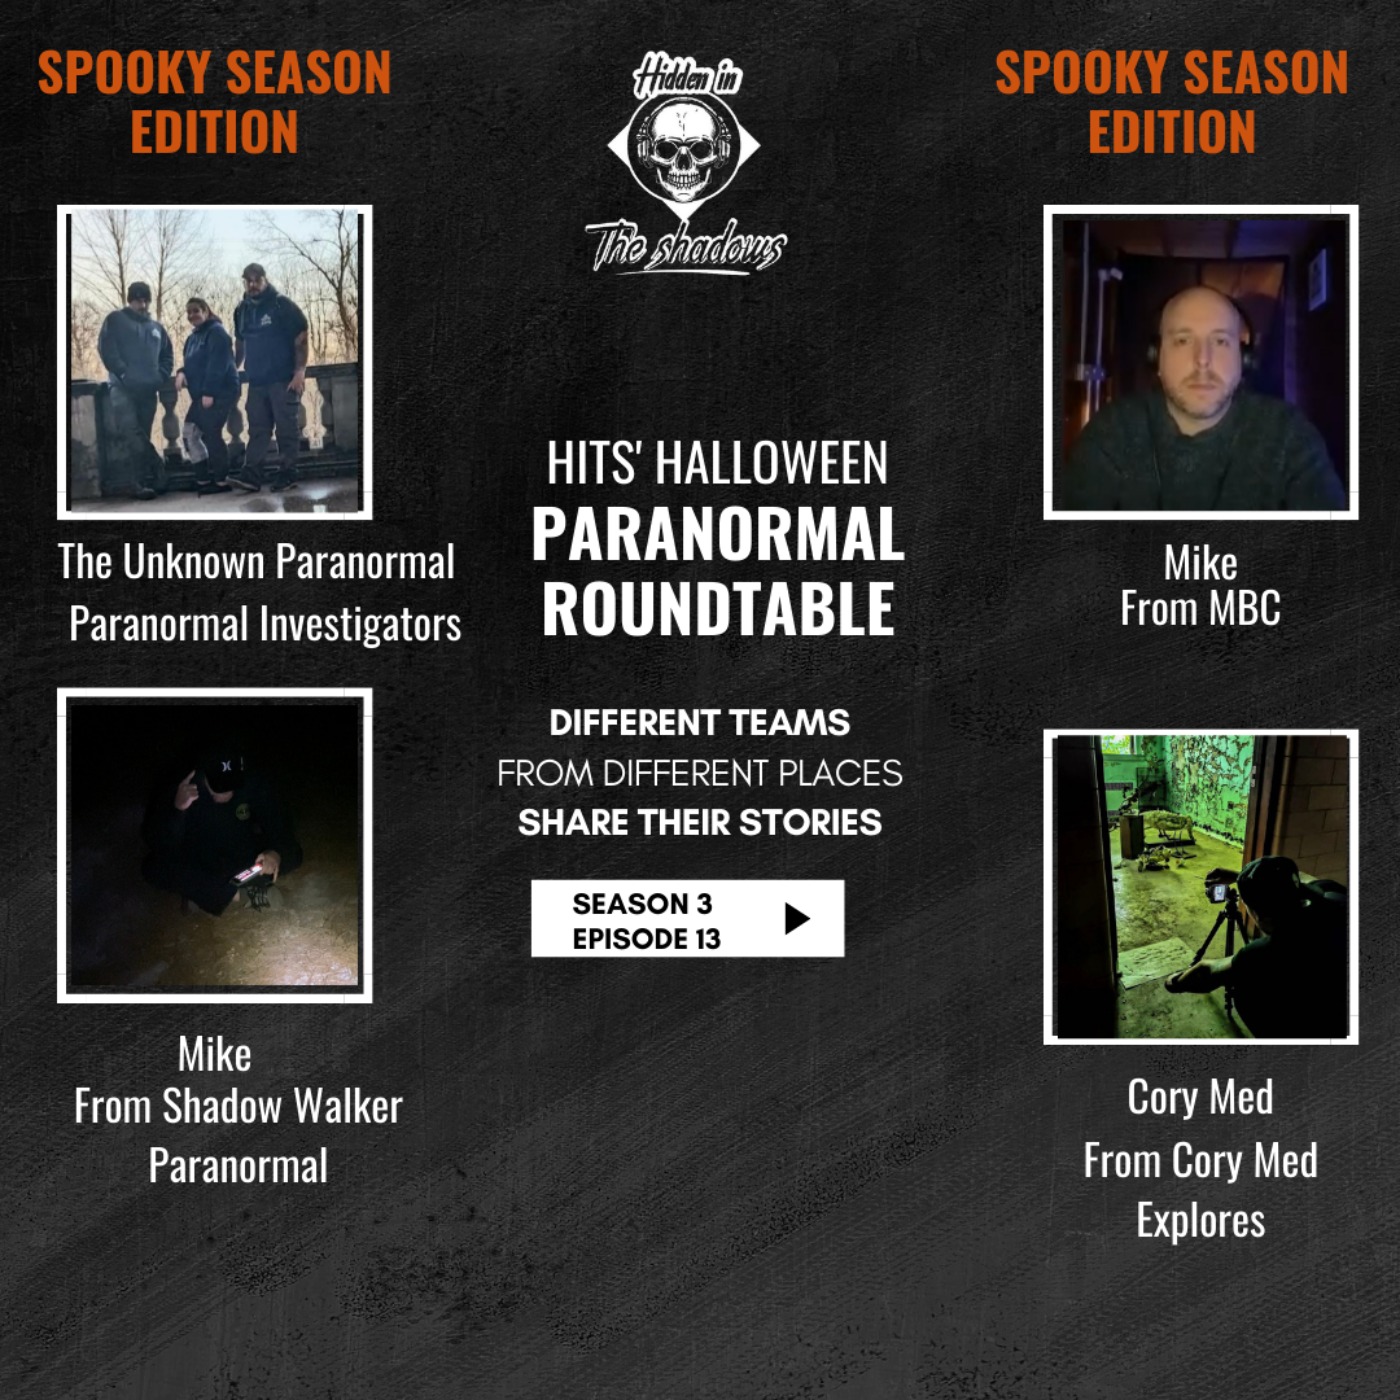 Hidden In The Shadows' Halloween Paranormal Roundtable Episode 2 Image